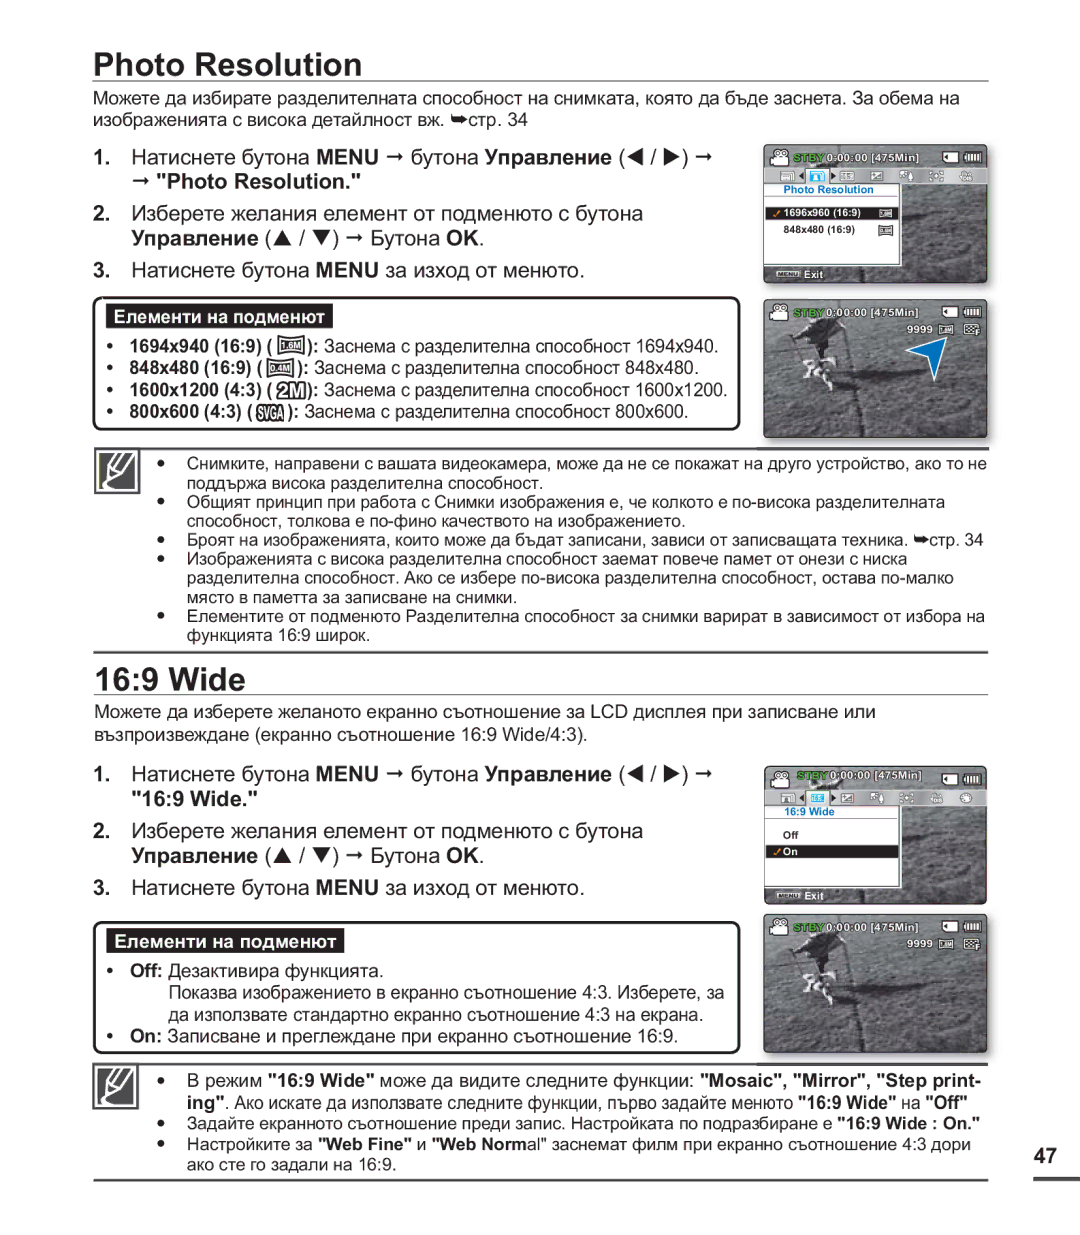 Samsung SMX-C24BP/EDC, SMX-C20RP/EDC, SMX-C20BP/EDC manual Photo Resolution, Wide 